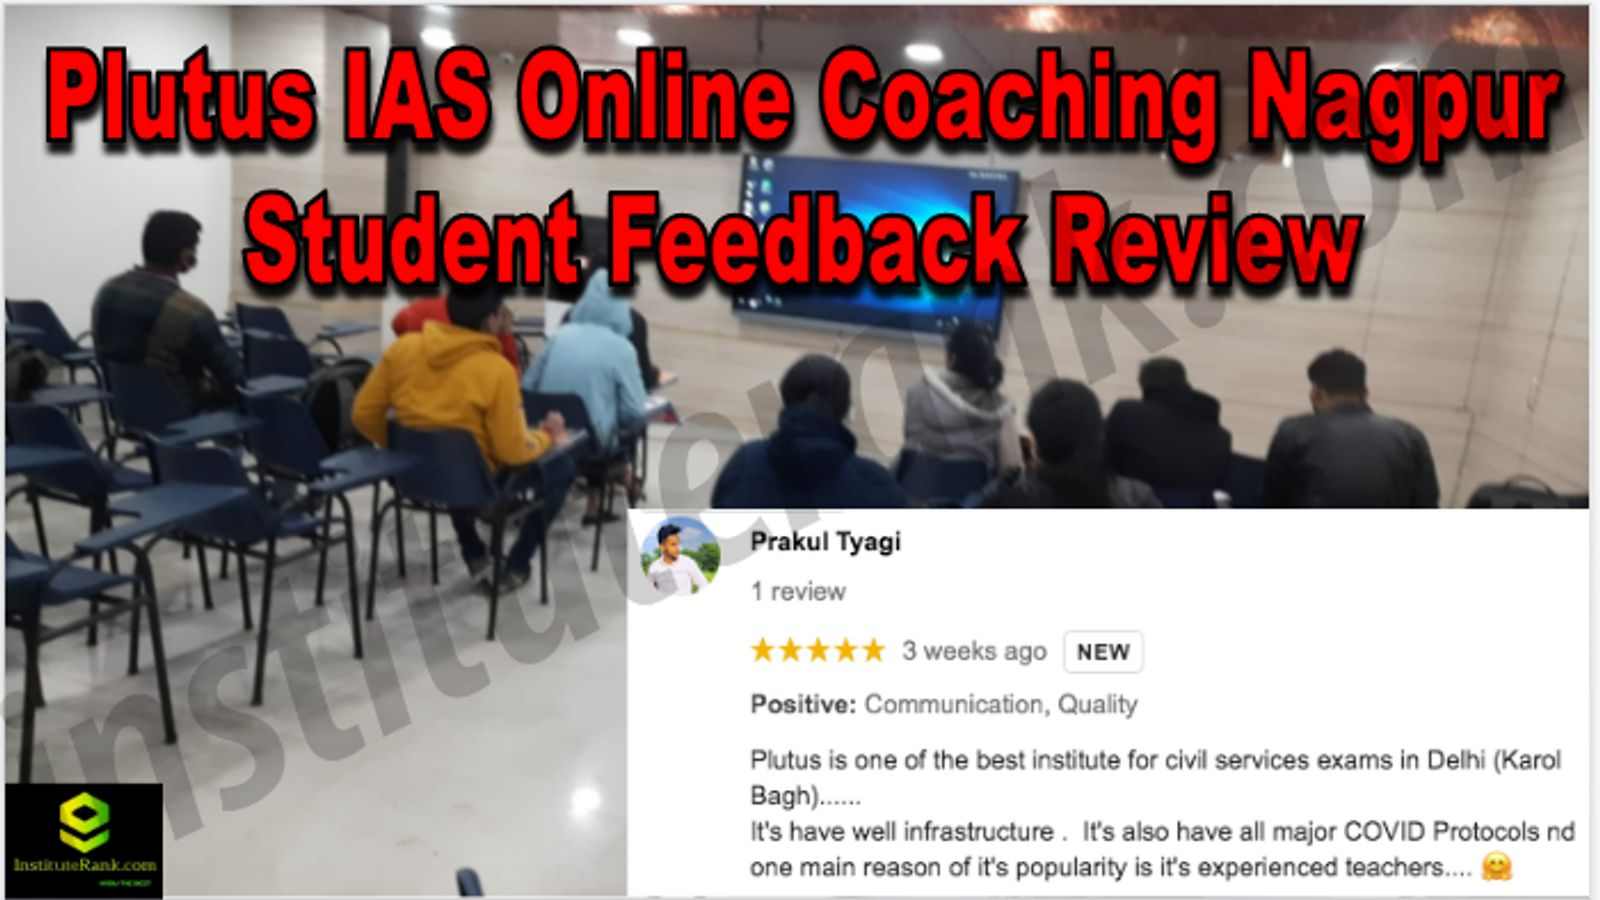 Plutus IAS Online Coaching Nagpur Student Feedback Reviews